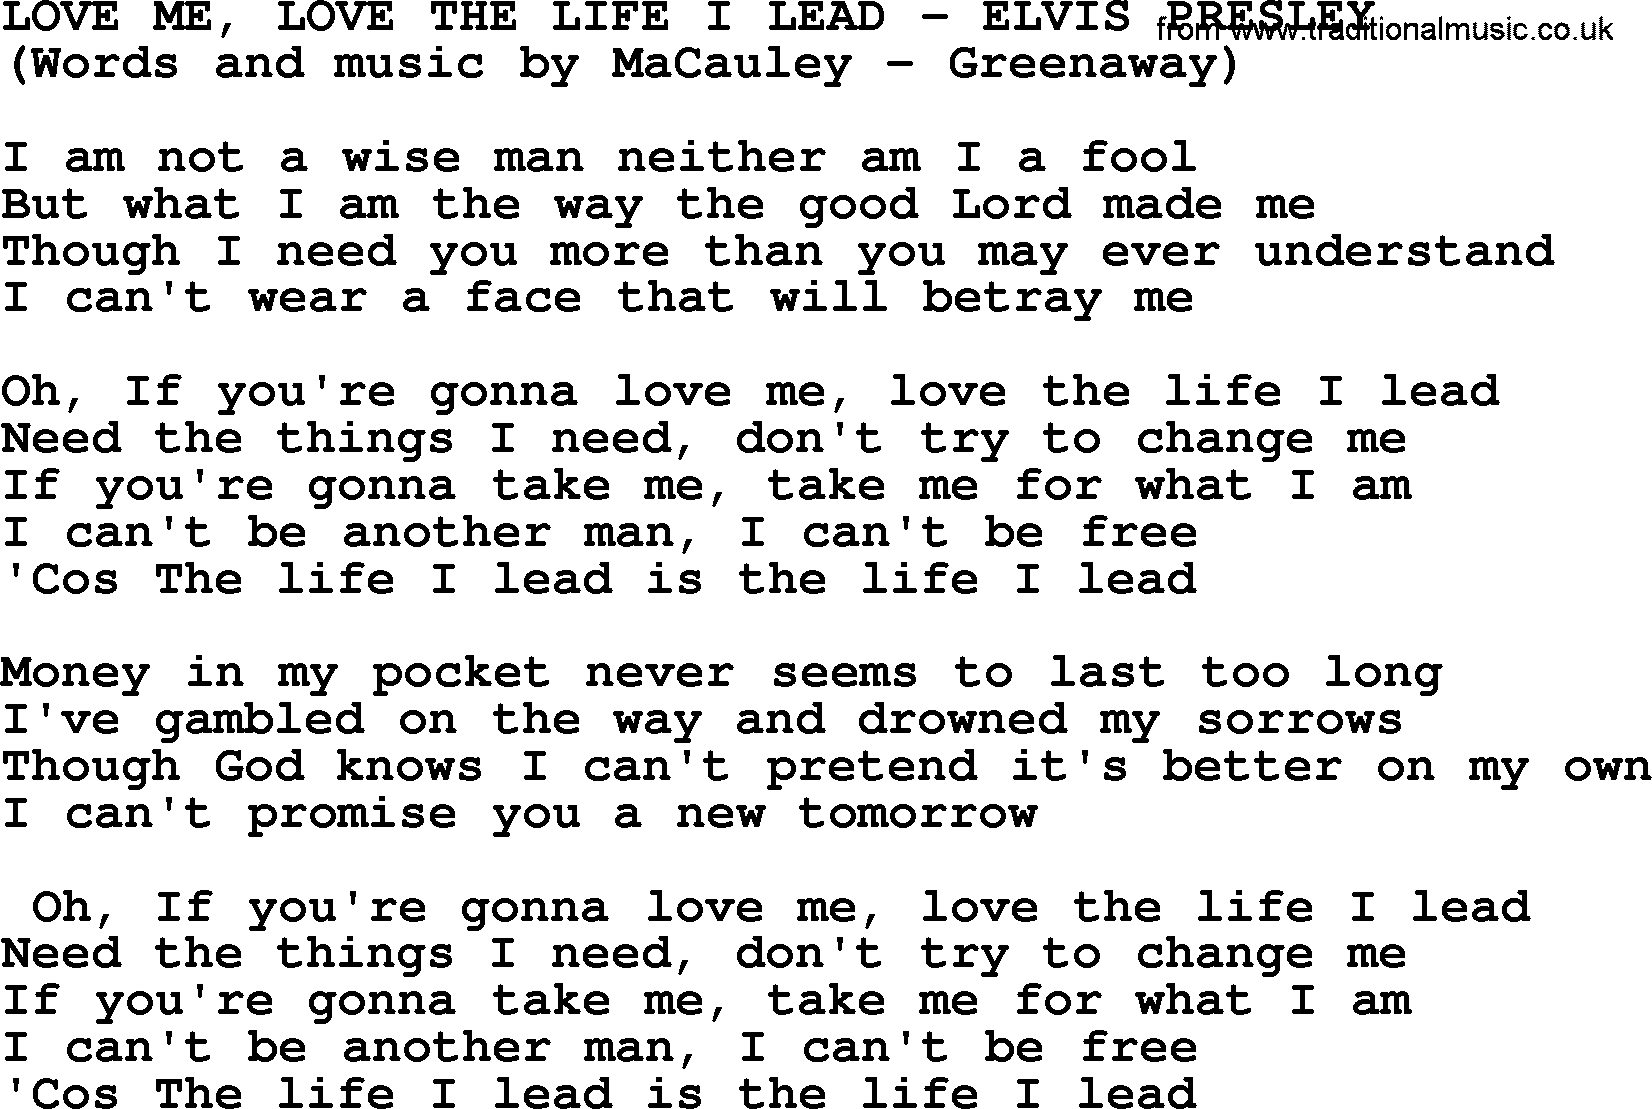 Elvis Presley song: Love Me, Love The Life I Lead lyrics